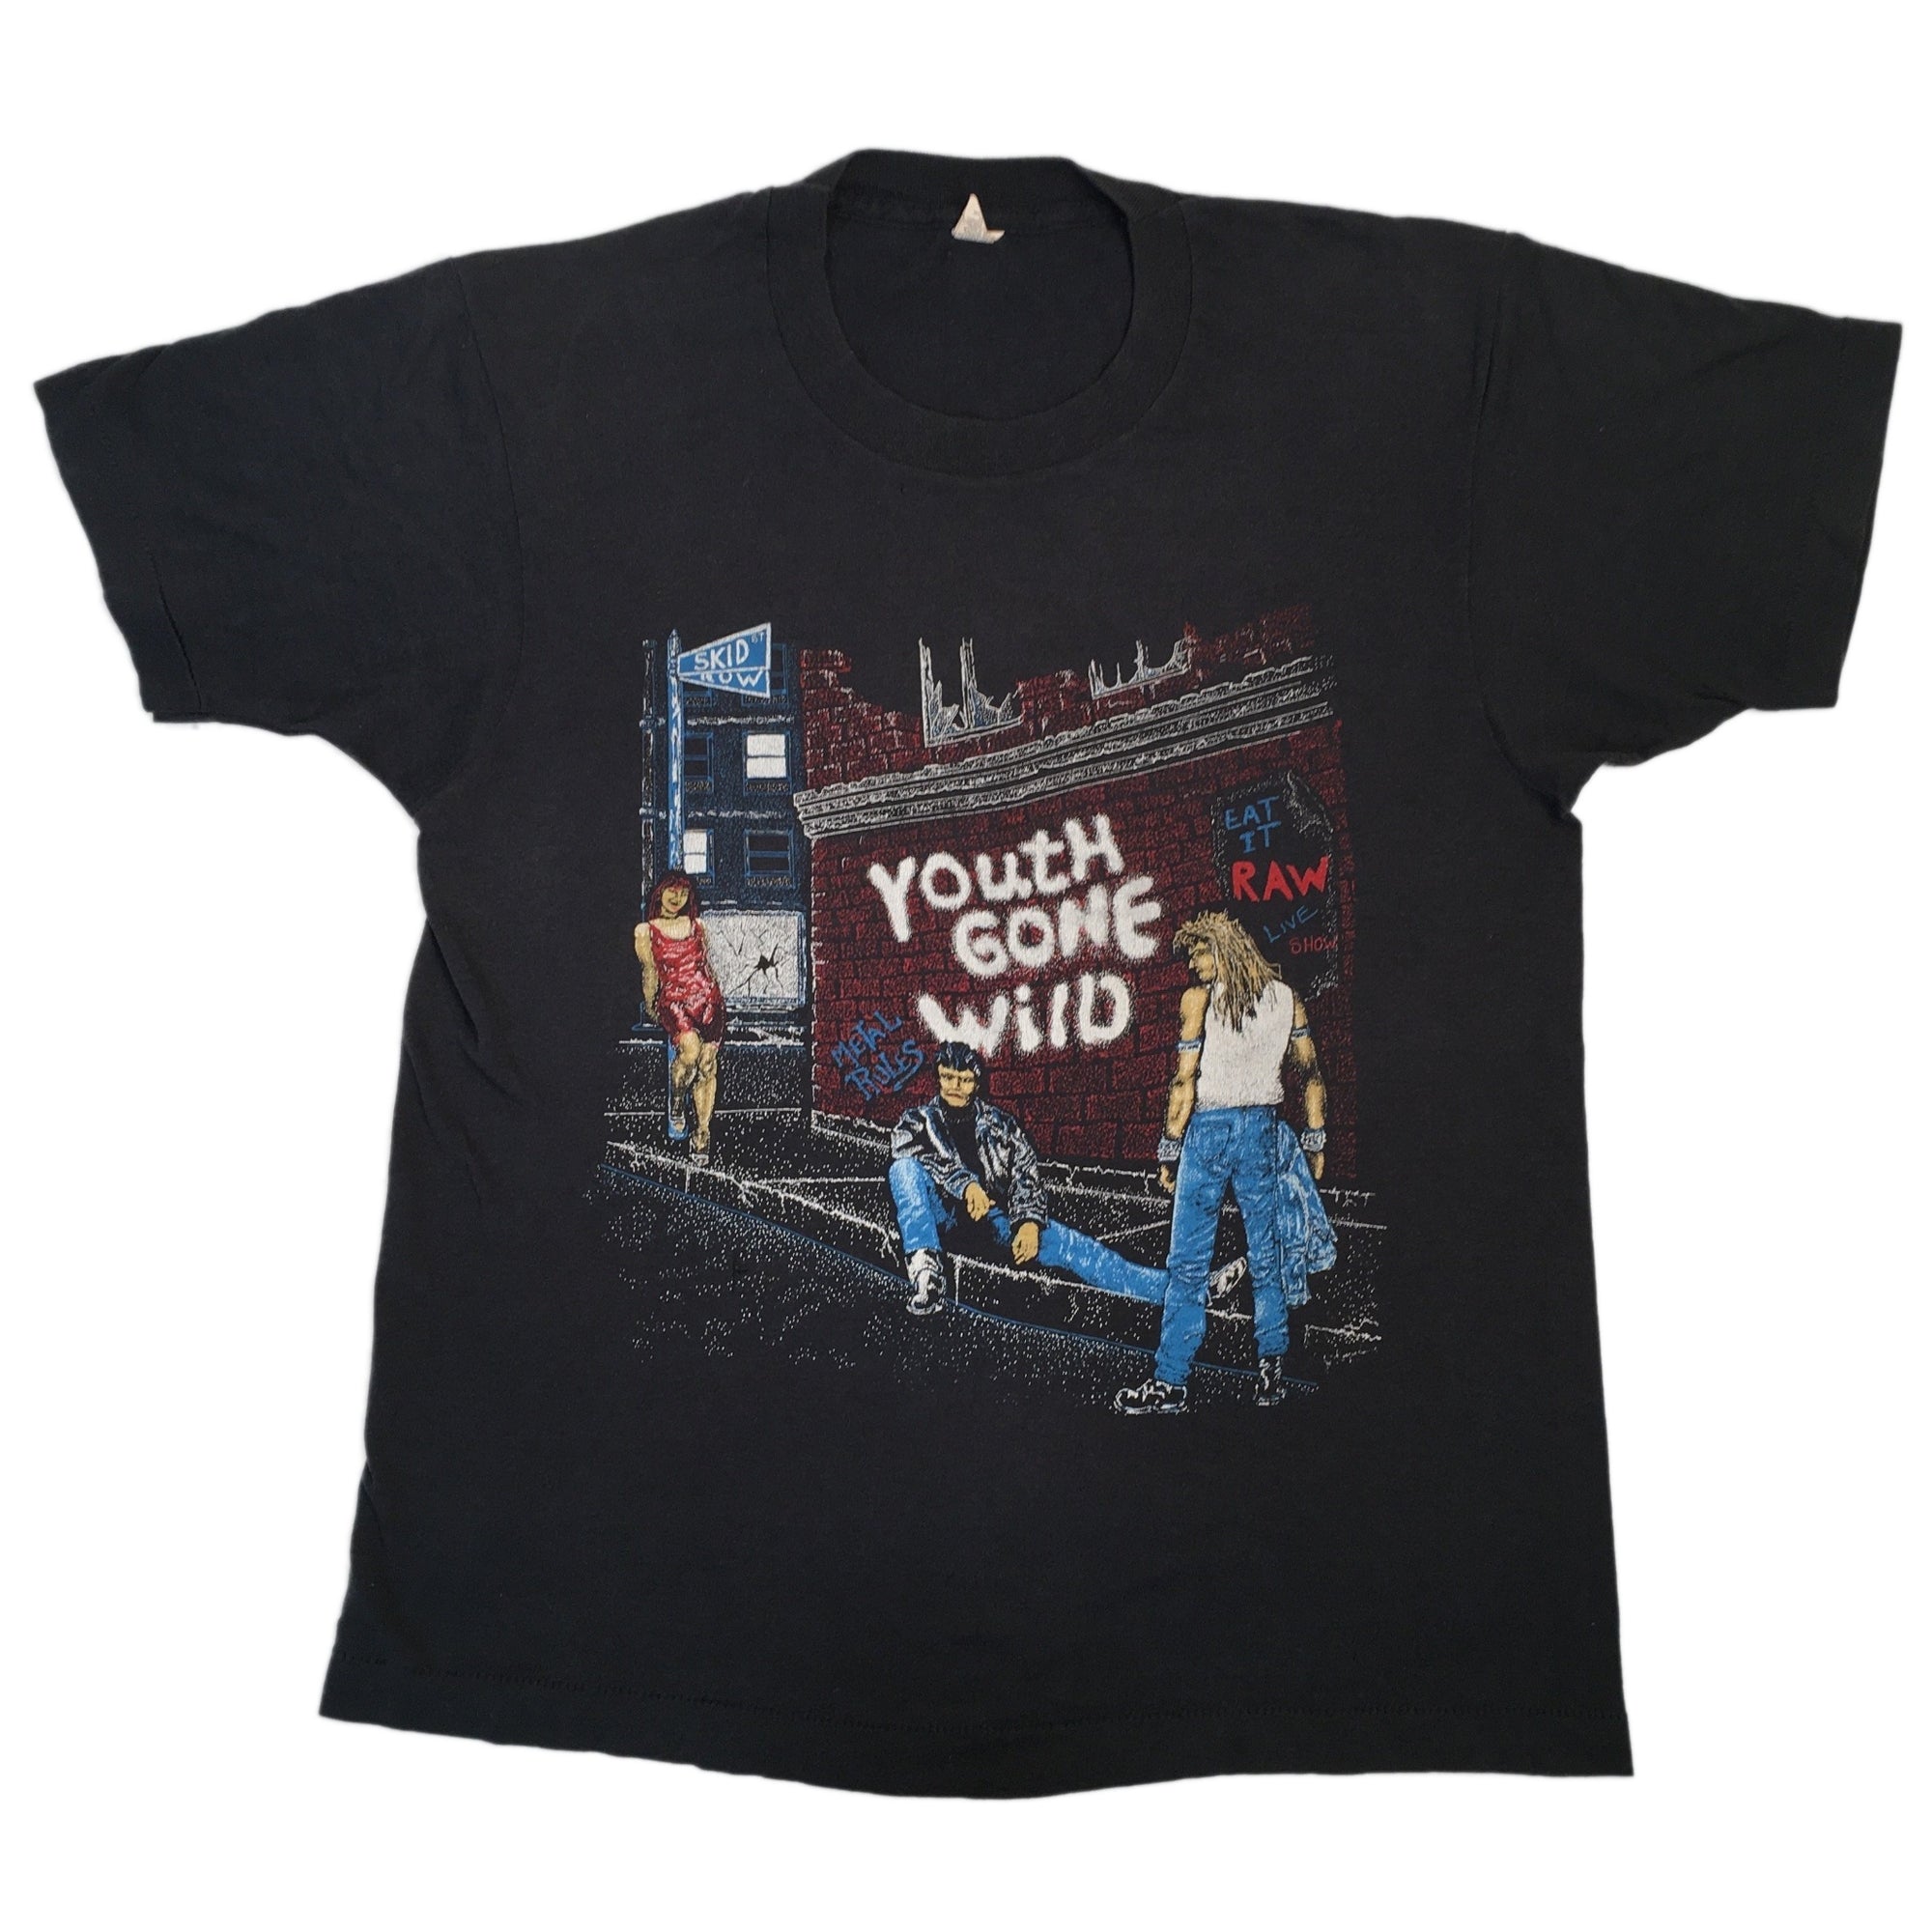 Vintage Skid row "Youth Gone Wild" T-Shirt - jointcustodydc